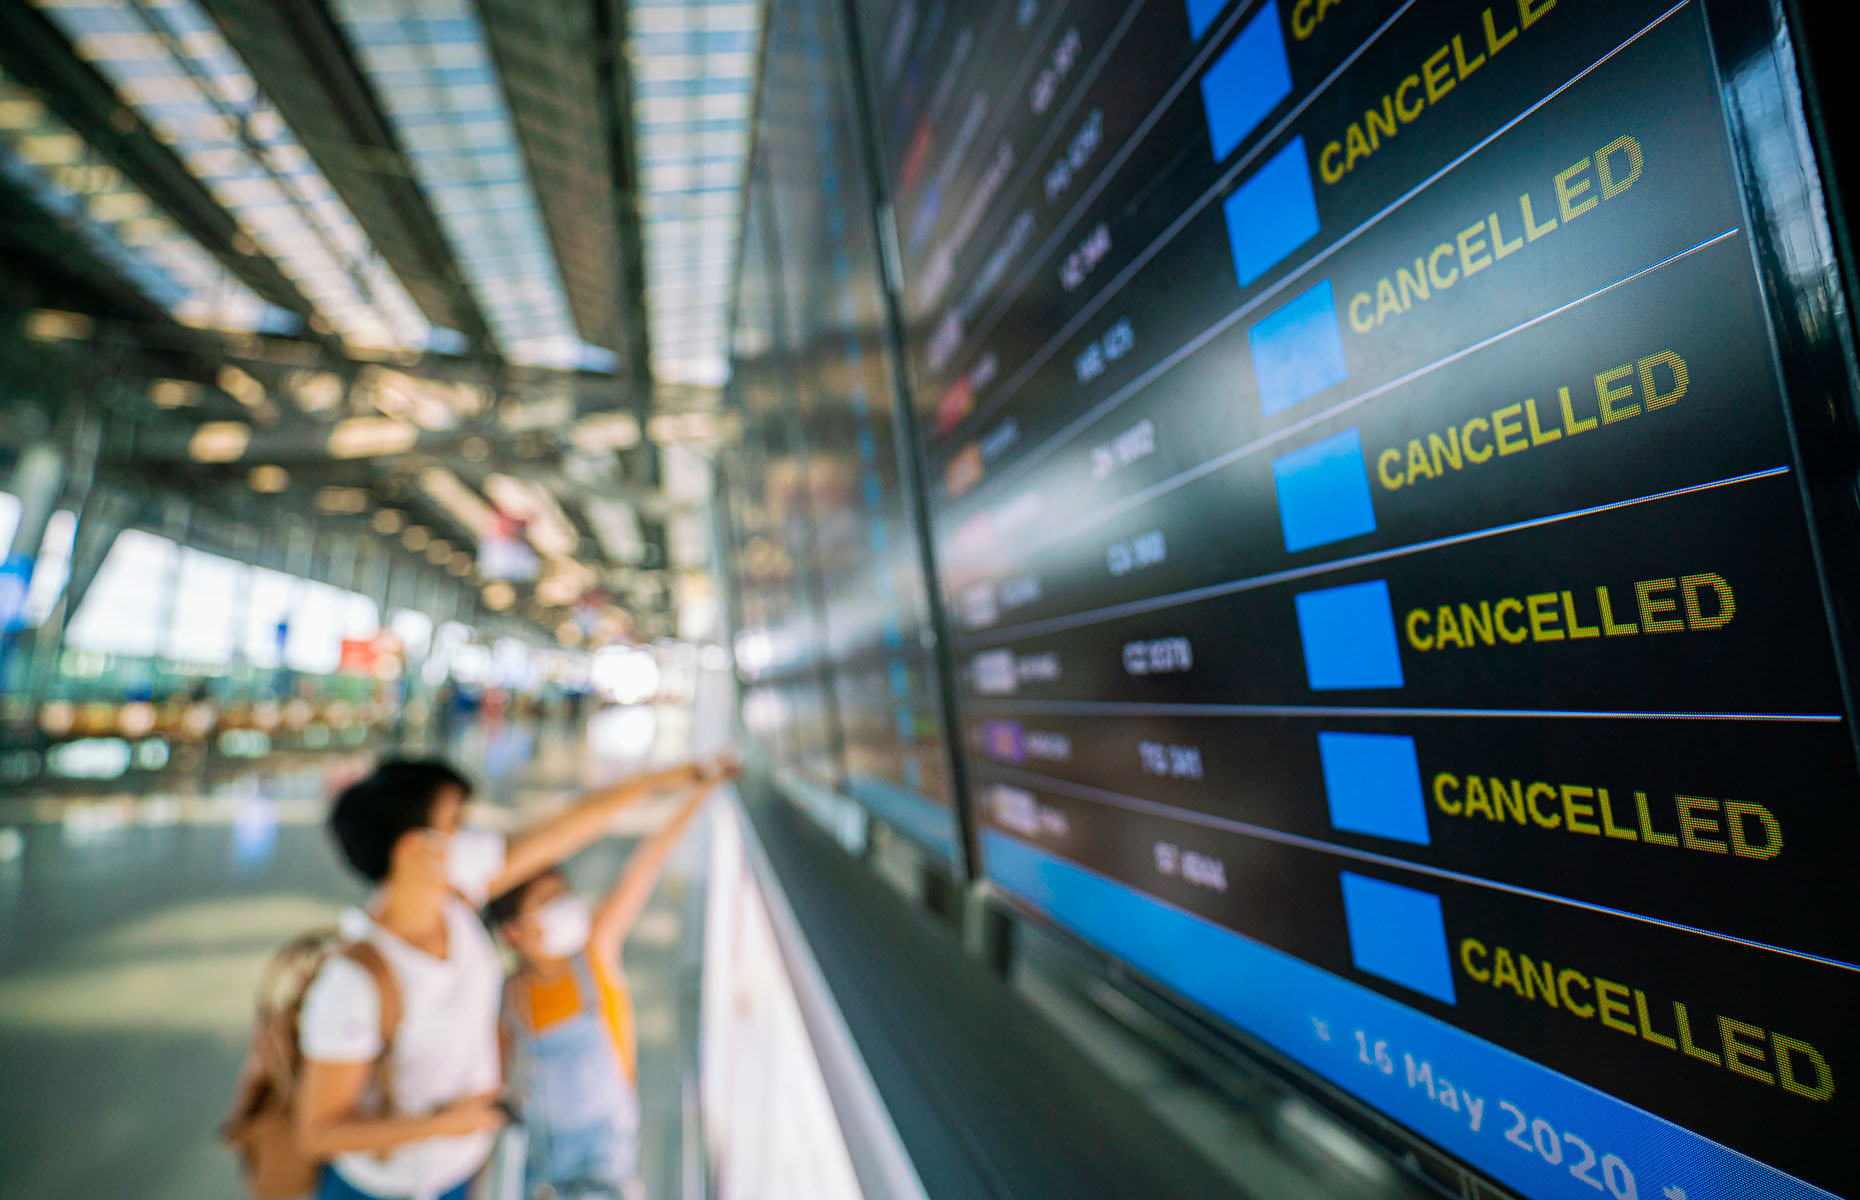 Cancelled flights on digital board (Image: People Image Studio/Shutterstock)